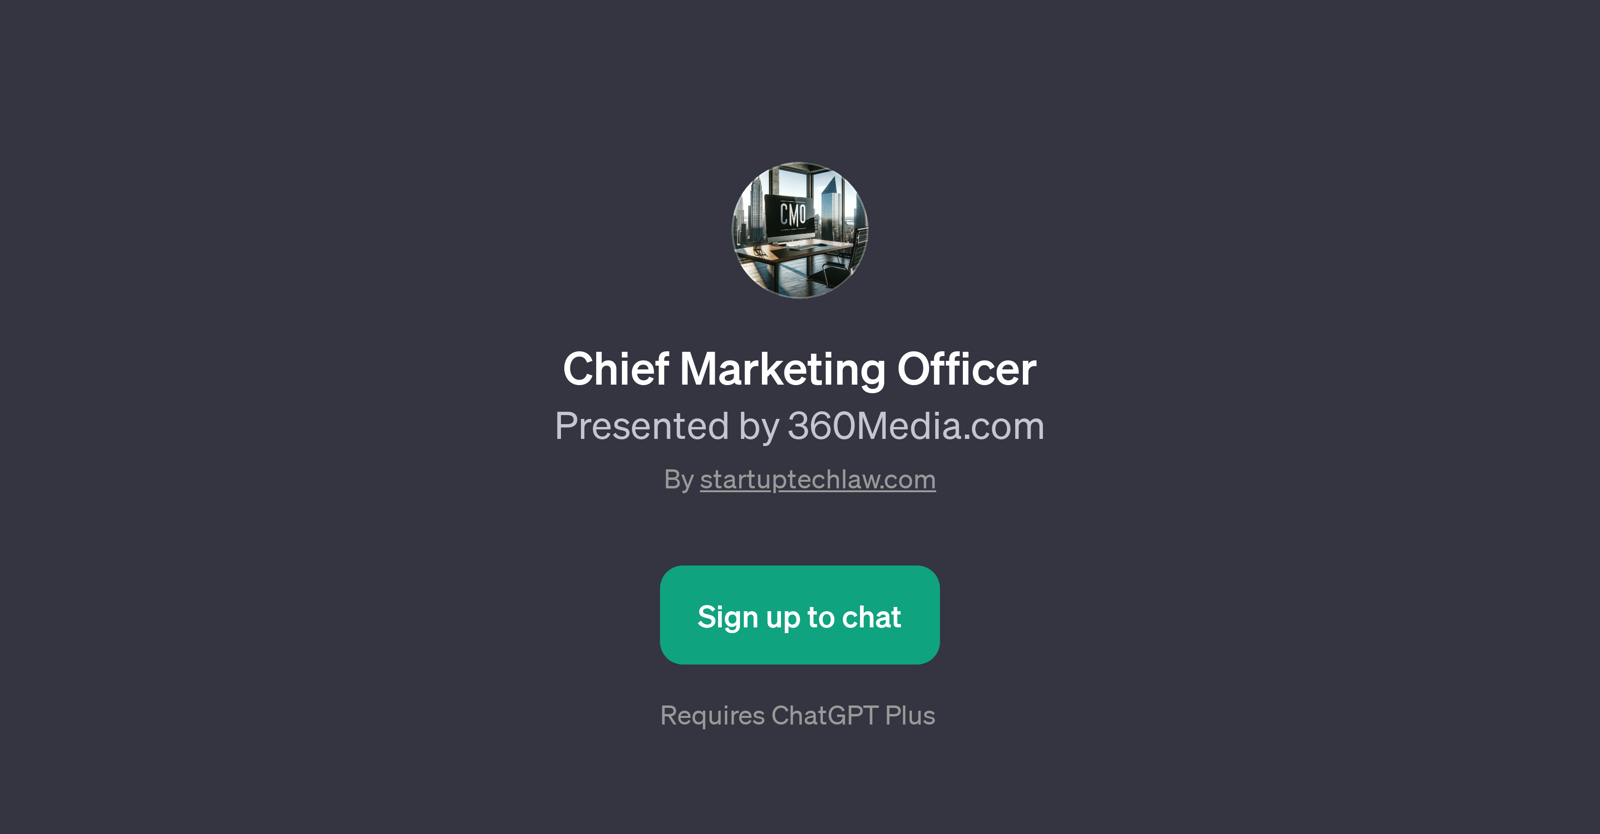 Chief Marketing Officer website